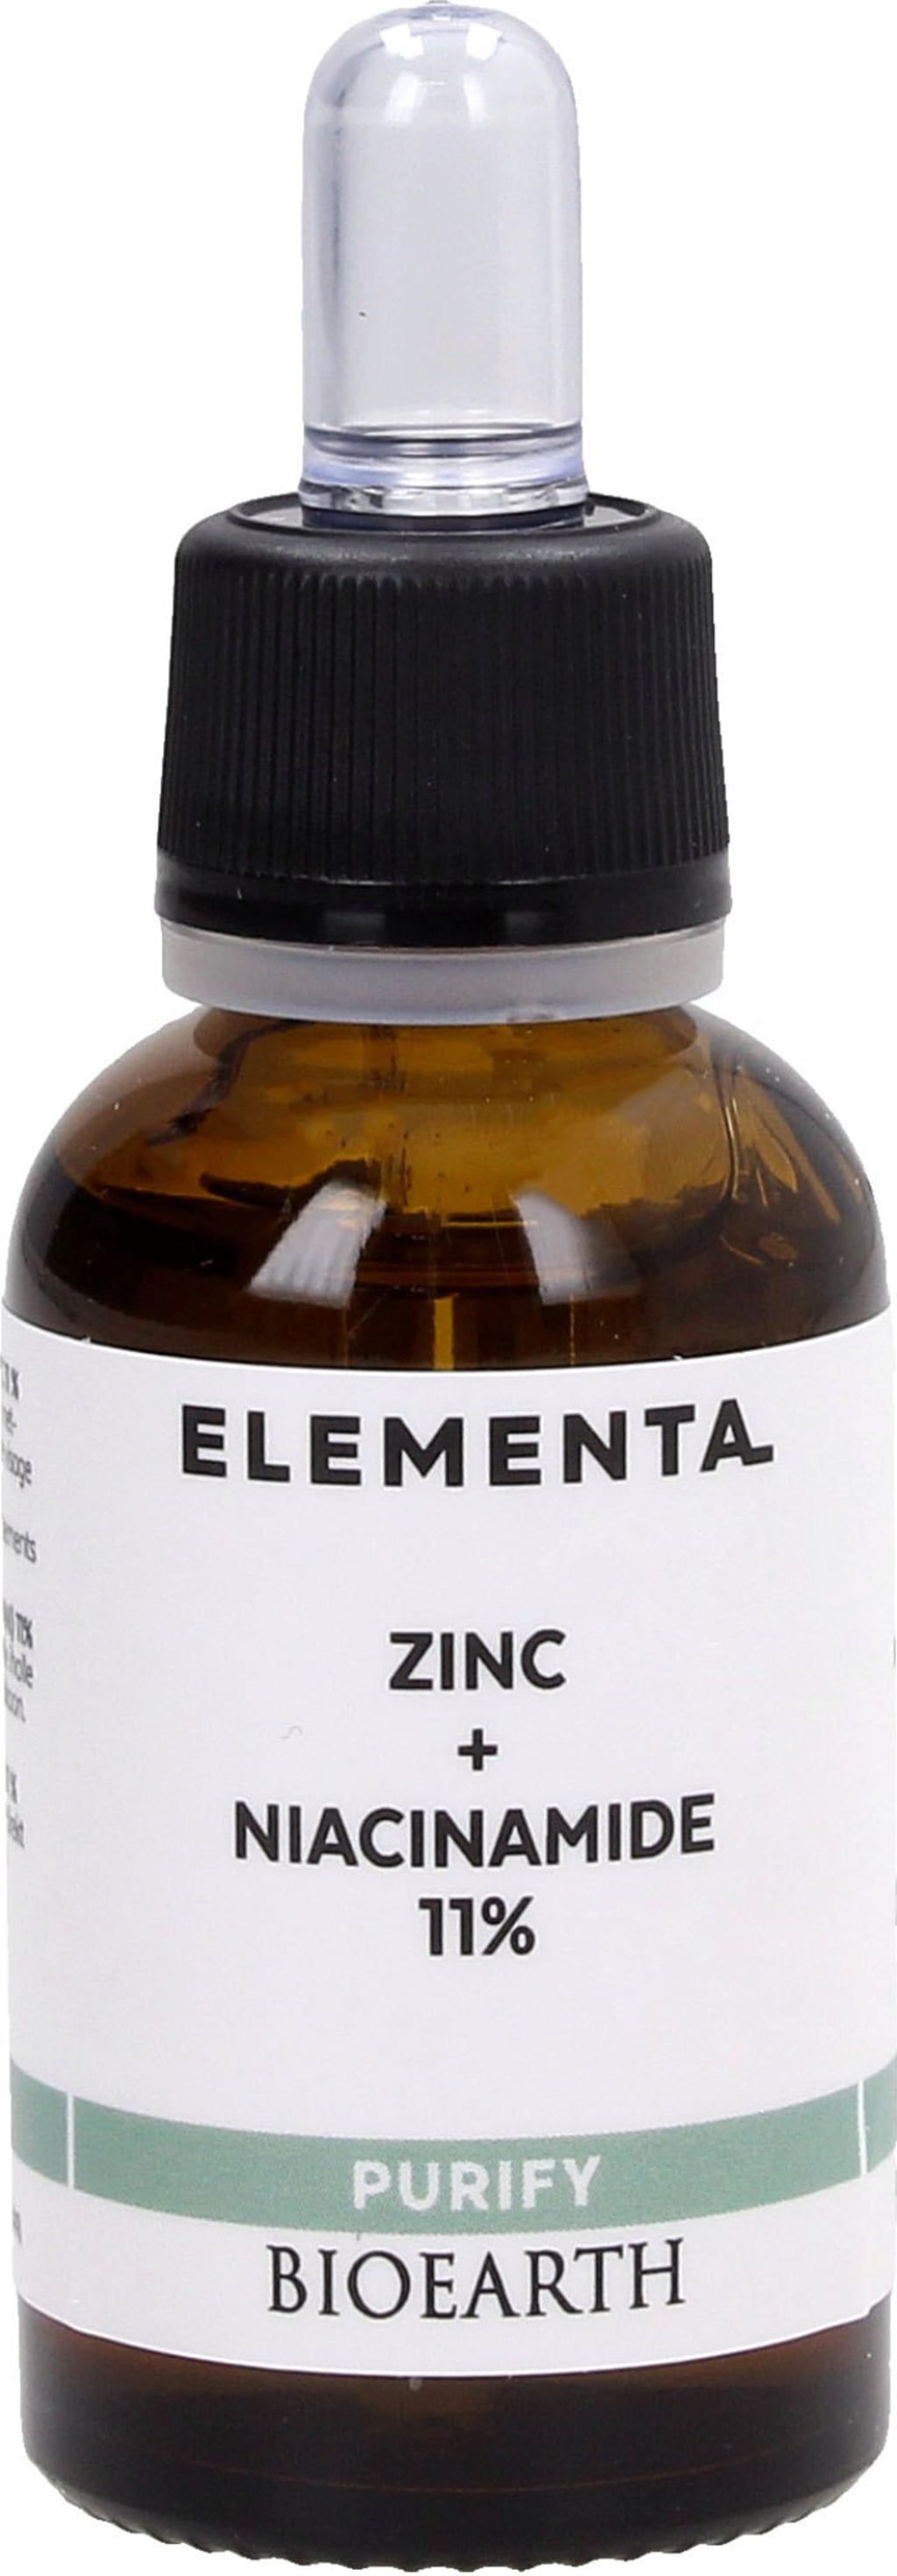 bioearth Zinc + Niacinamide 11% ELEMENTA PURIFY - 30 ml